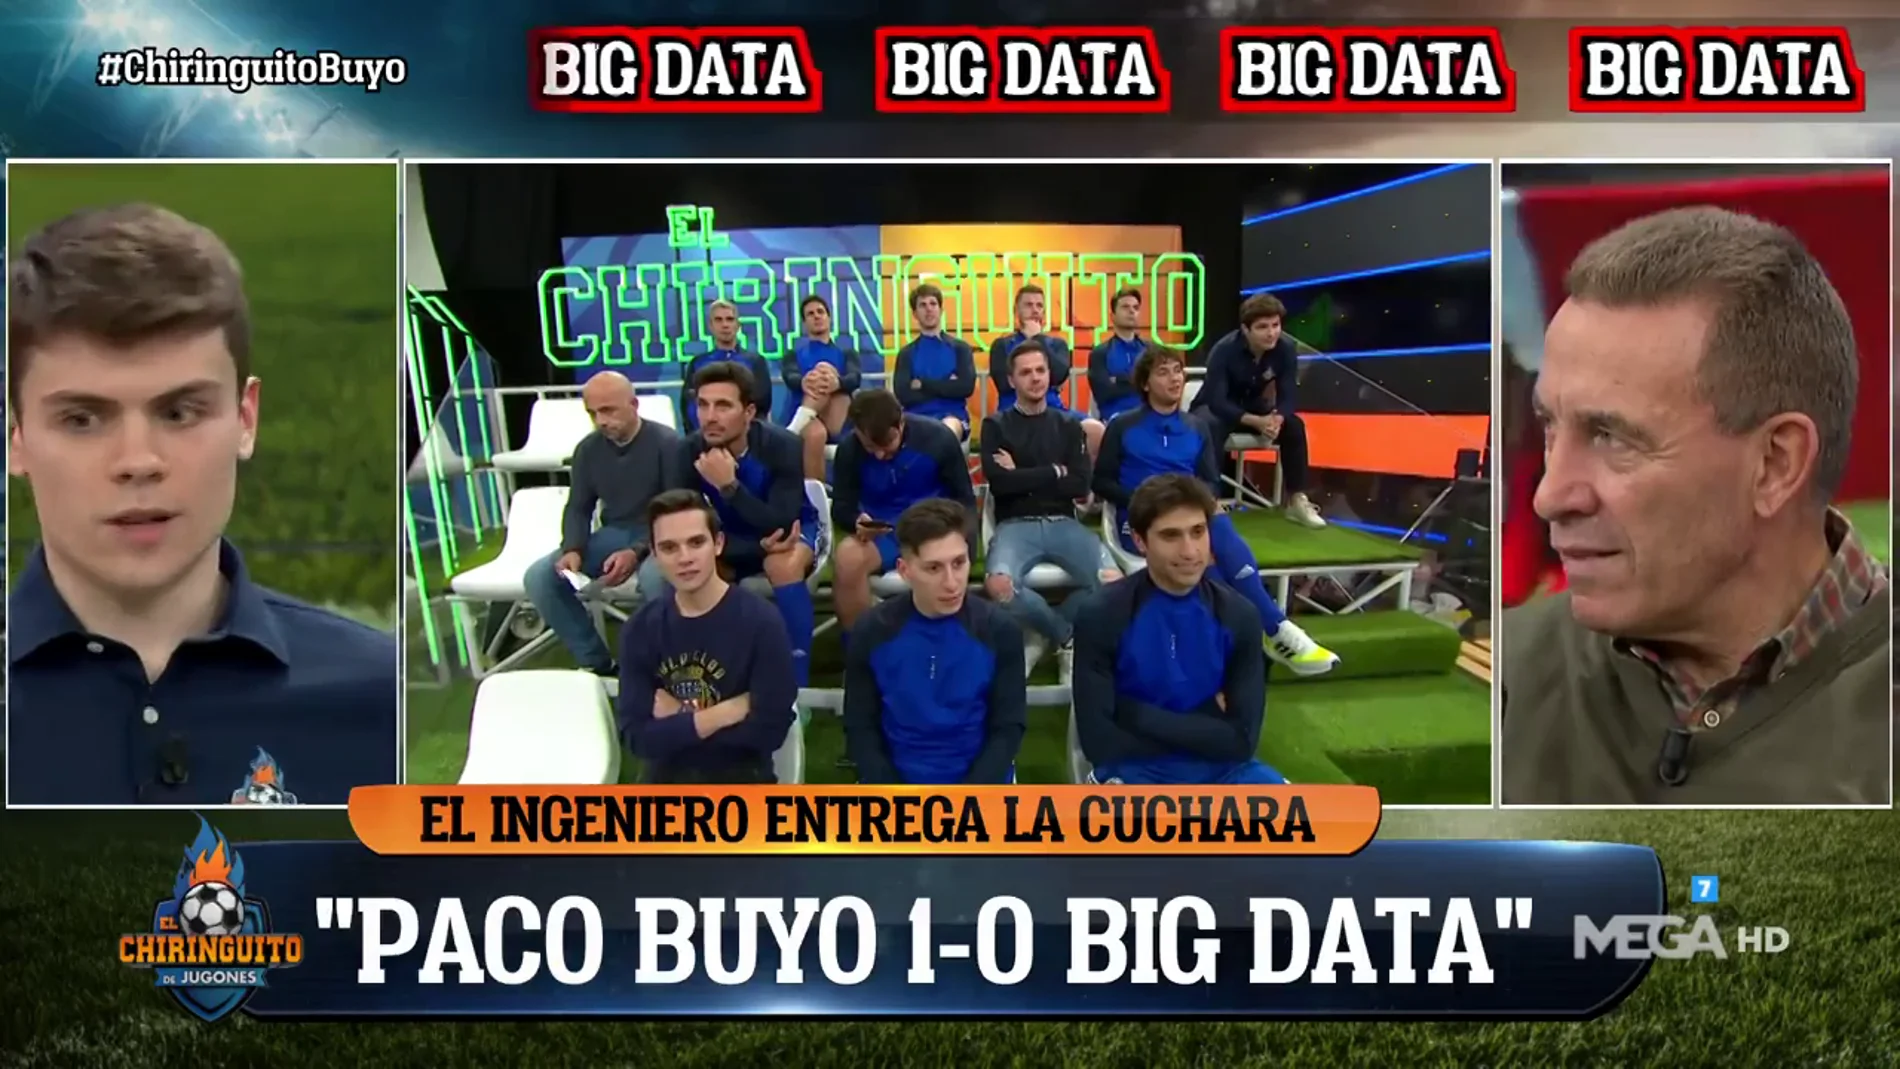 Paco Buyo 1-0 Big Data